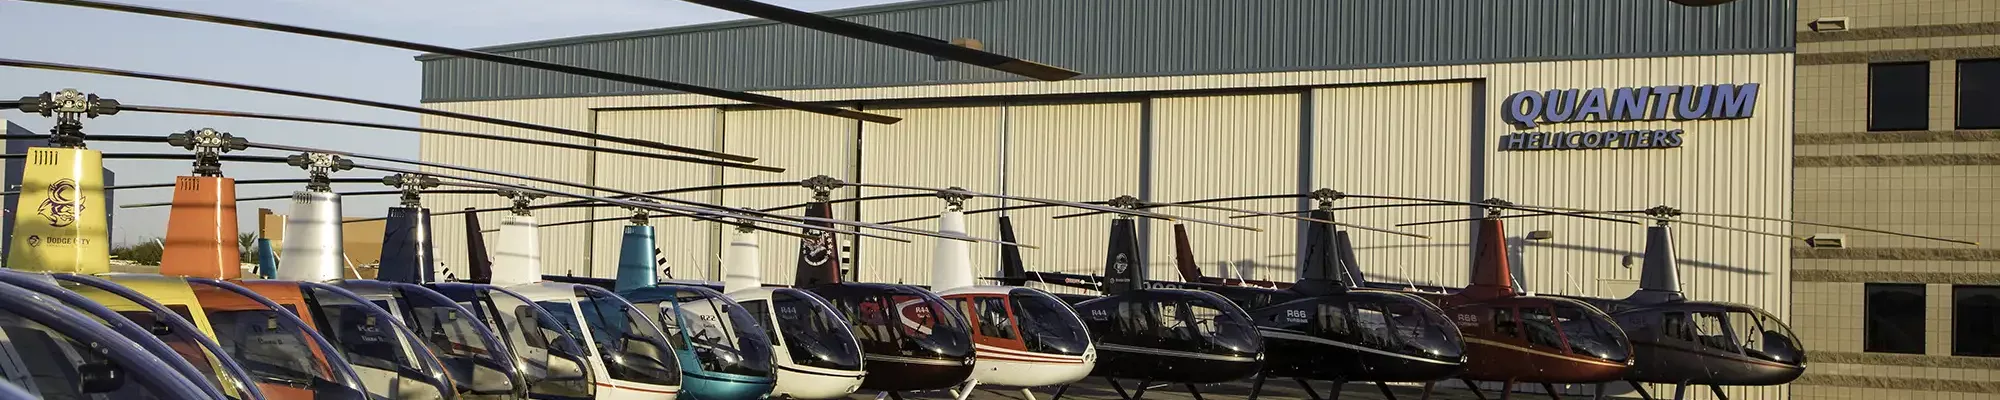 Quantum Helicopters fleet